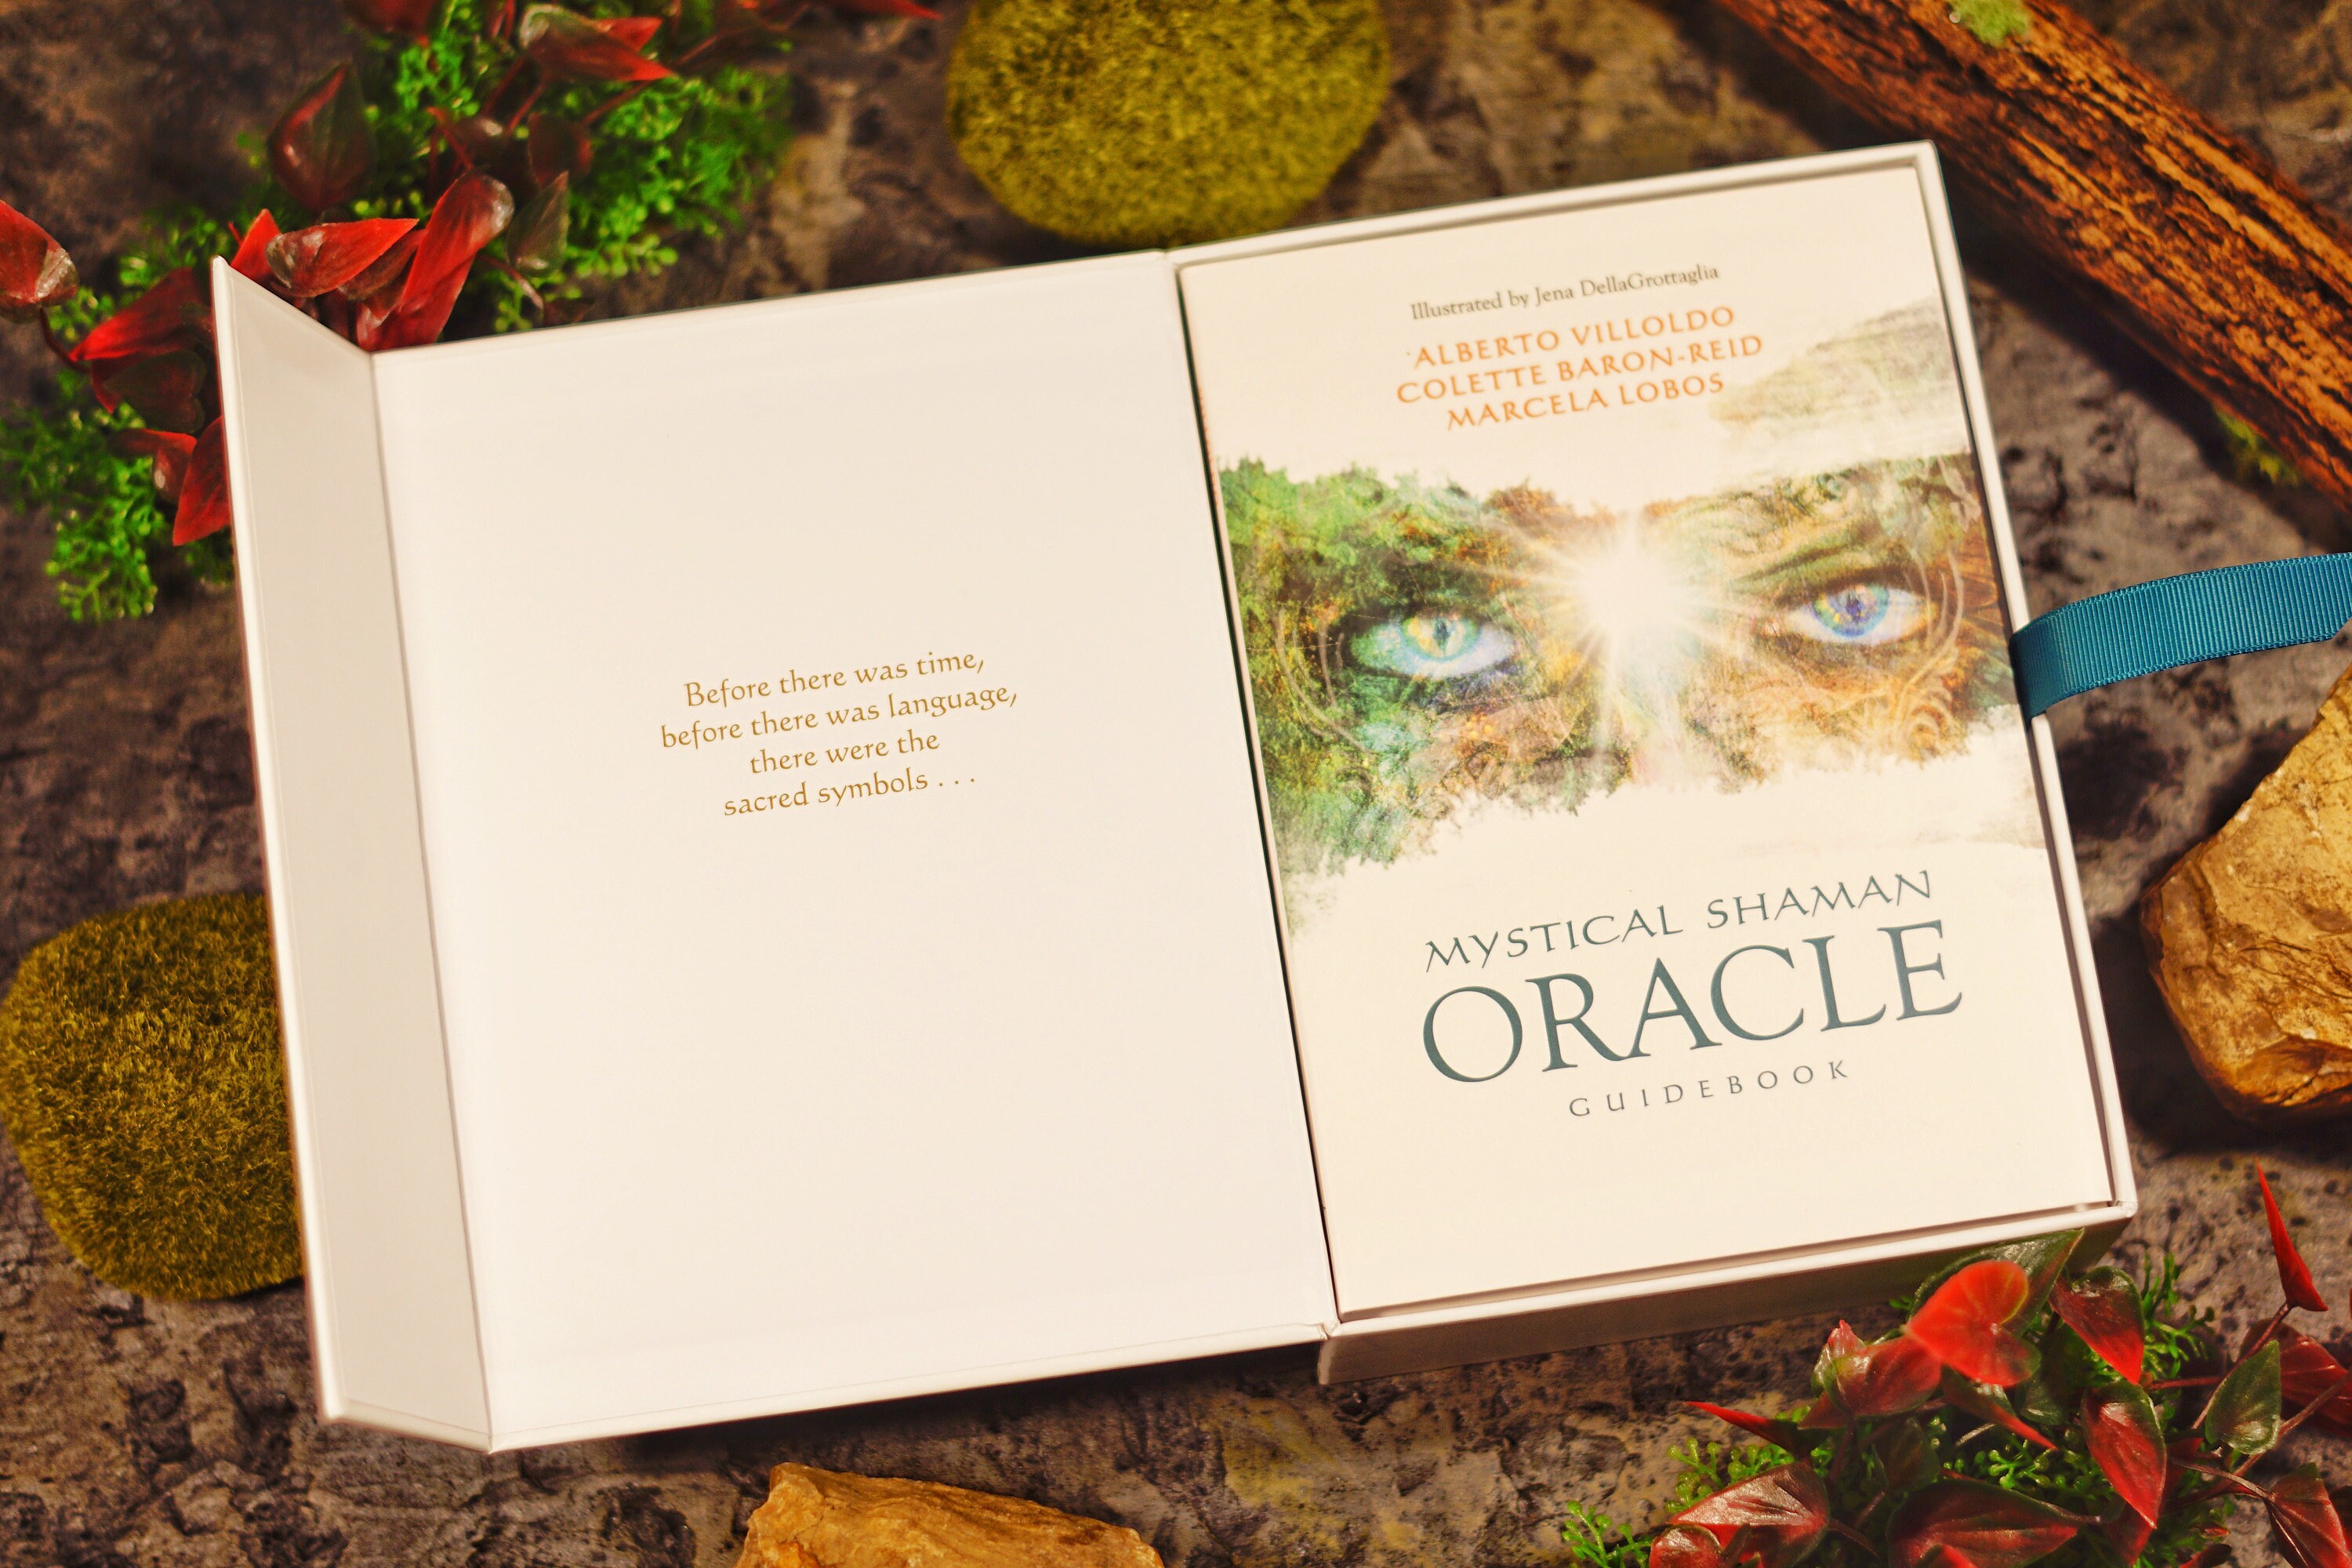 Mystical Shaman Pocket Oracle Cards by Alberto Villoldo, Colette  Baron-Reid: 9781401973674 | : Books